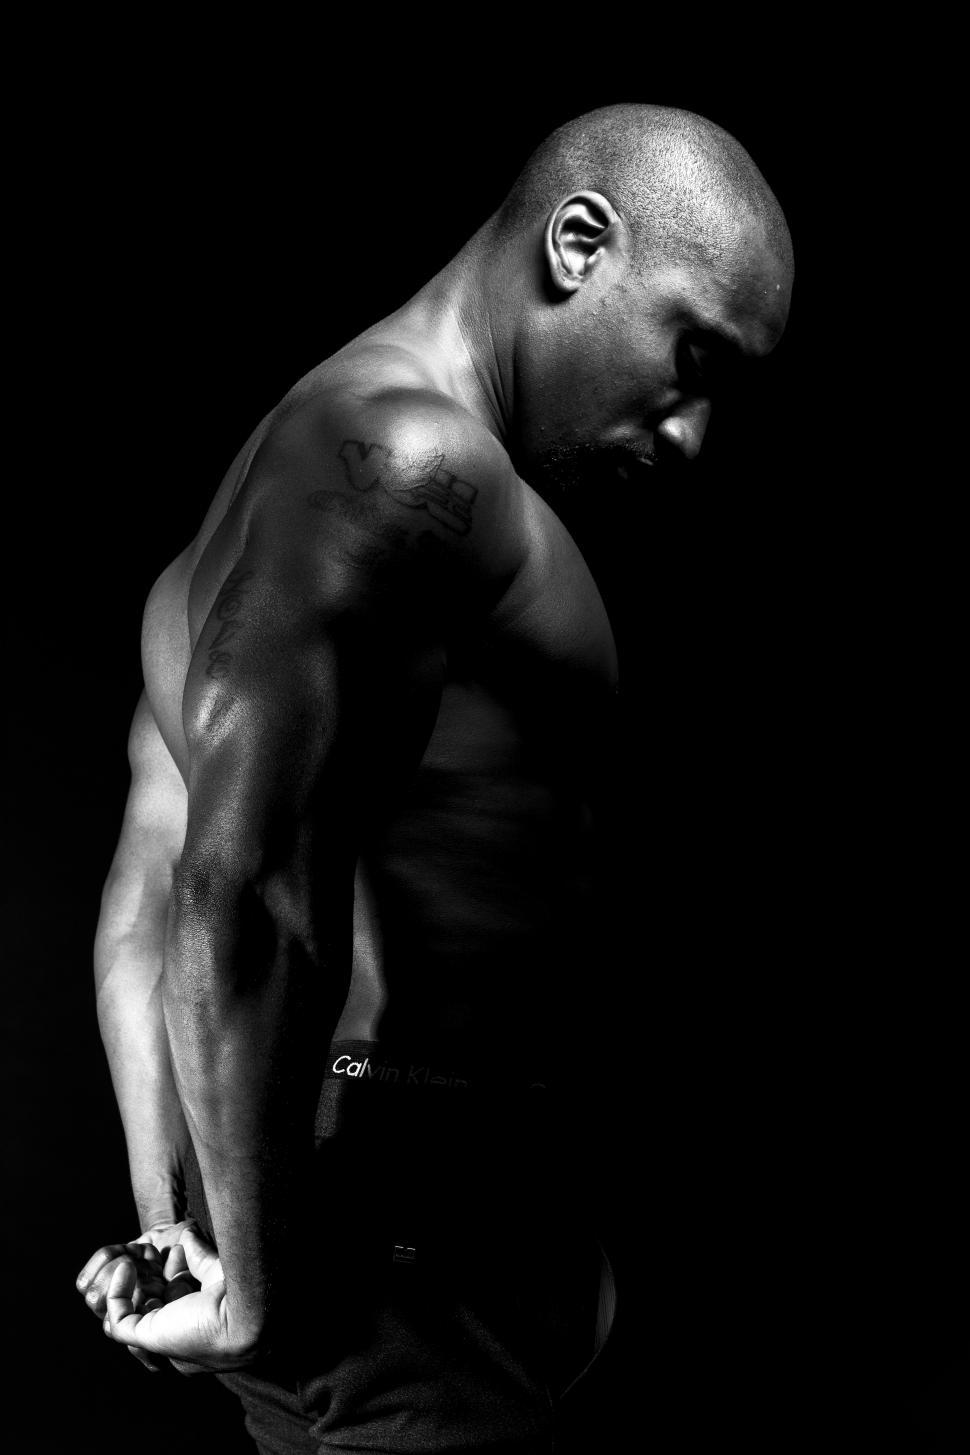 Free Image of Dark view of Male Bodybuilder 